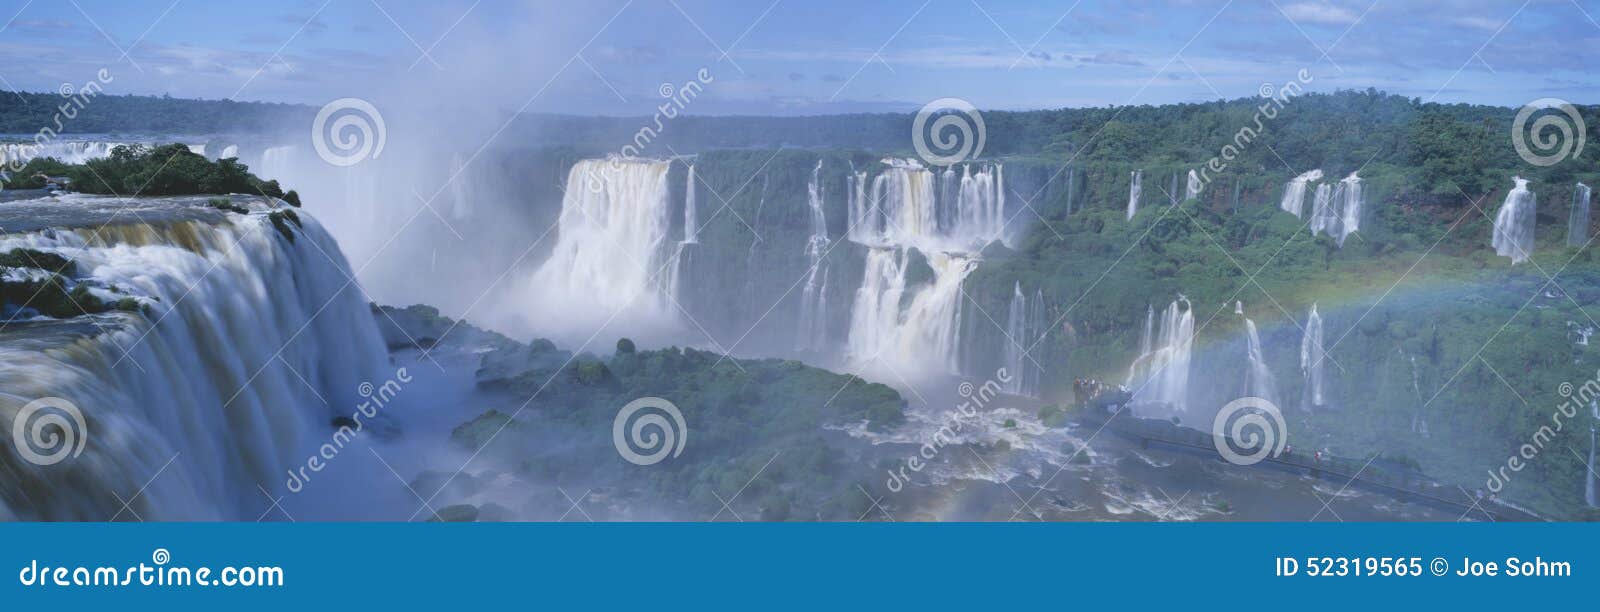 panoramic view of iguazu waterfalls in parque nacional iguazu, salto floriano, brazil